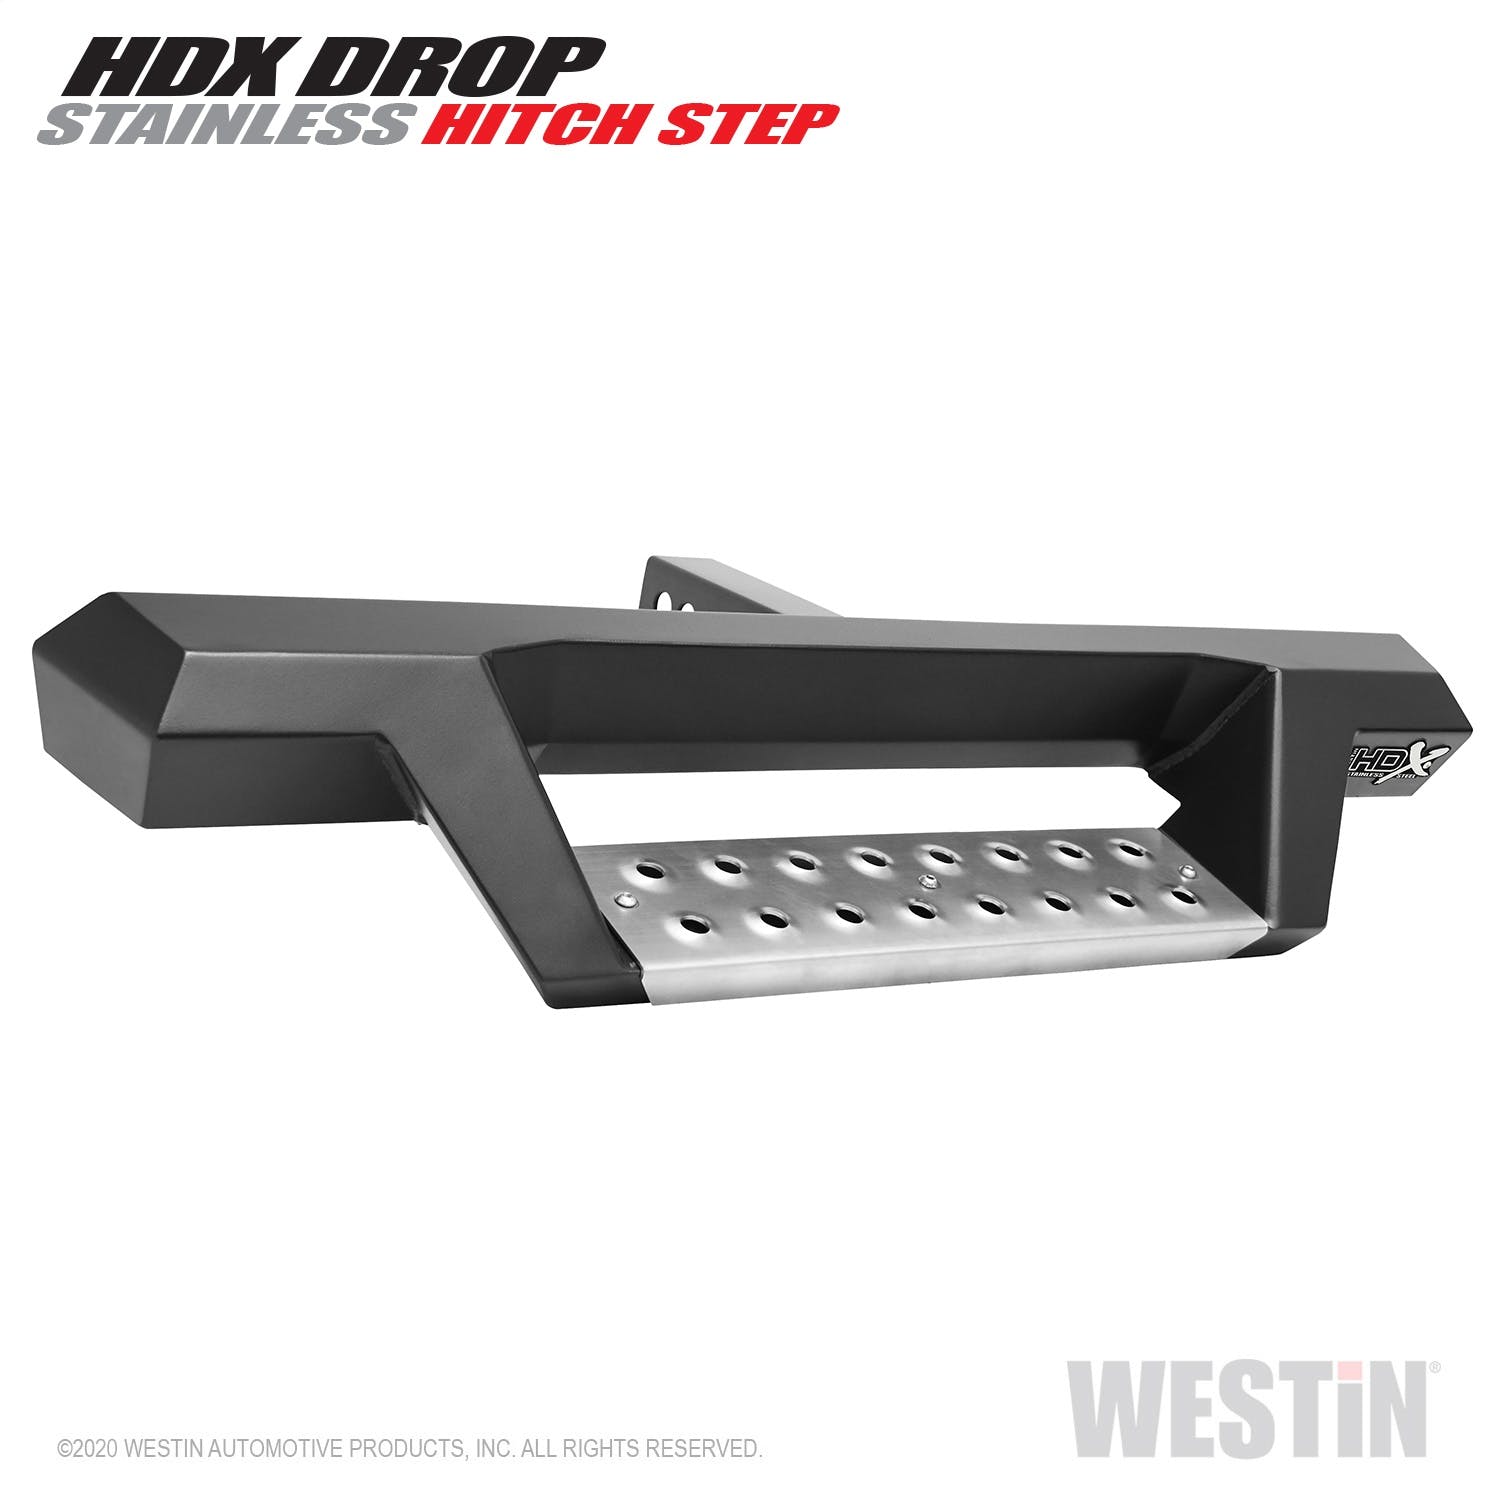 Westin Automotive 56-100152 HDX Stainless Drop Hitch Step Textured Black